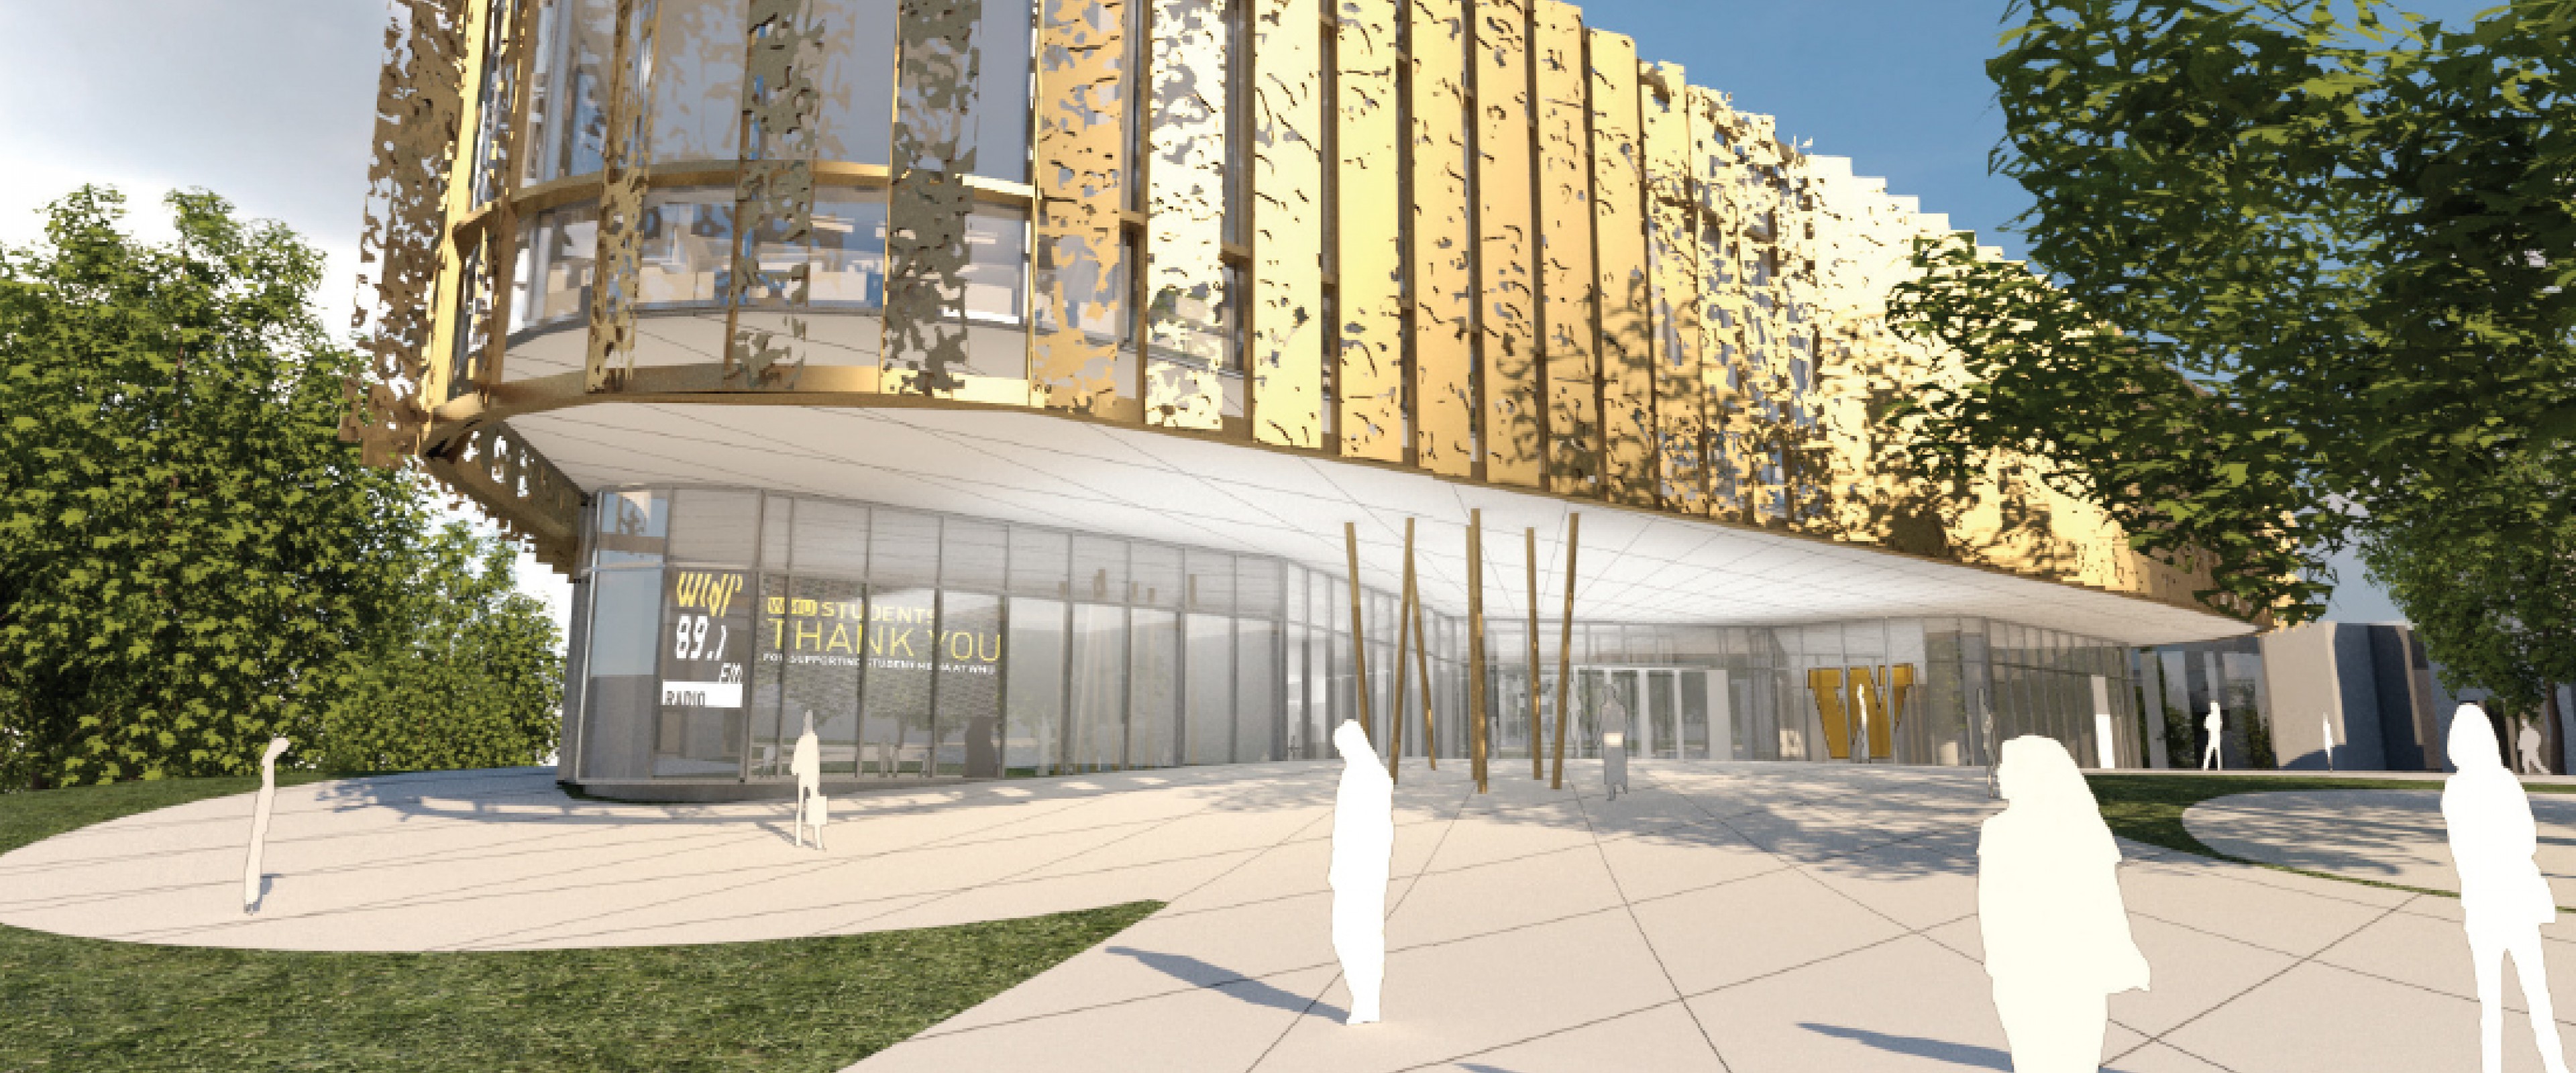 New WMU Student Center Opening 2021